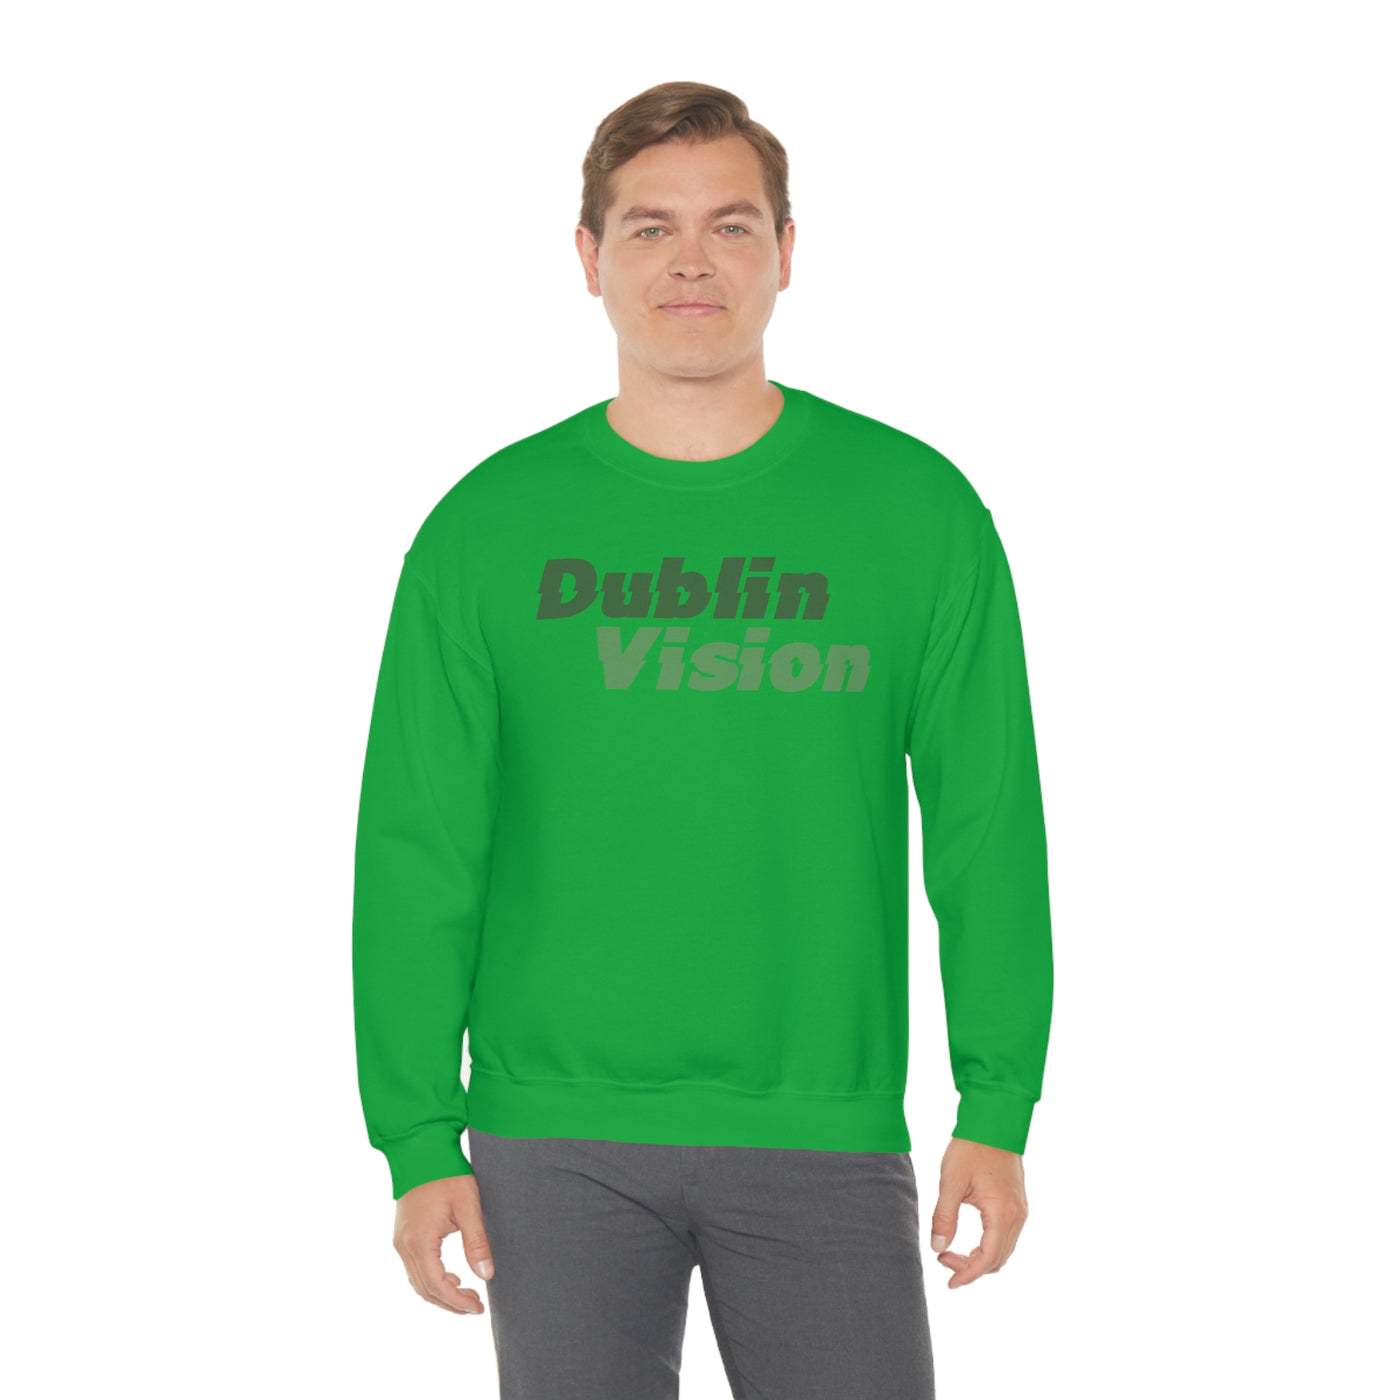 Dublin Vision Crewneck Sweatshirt